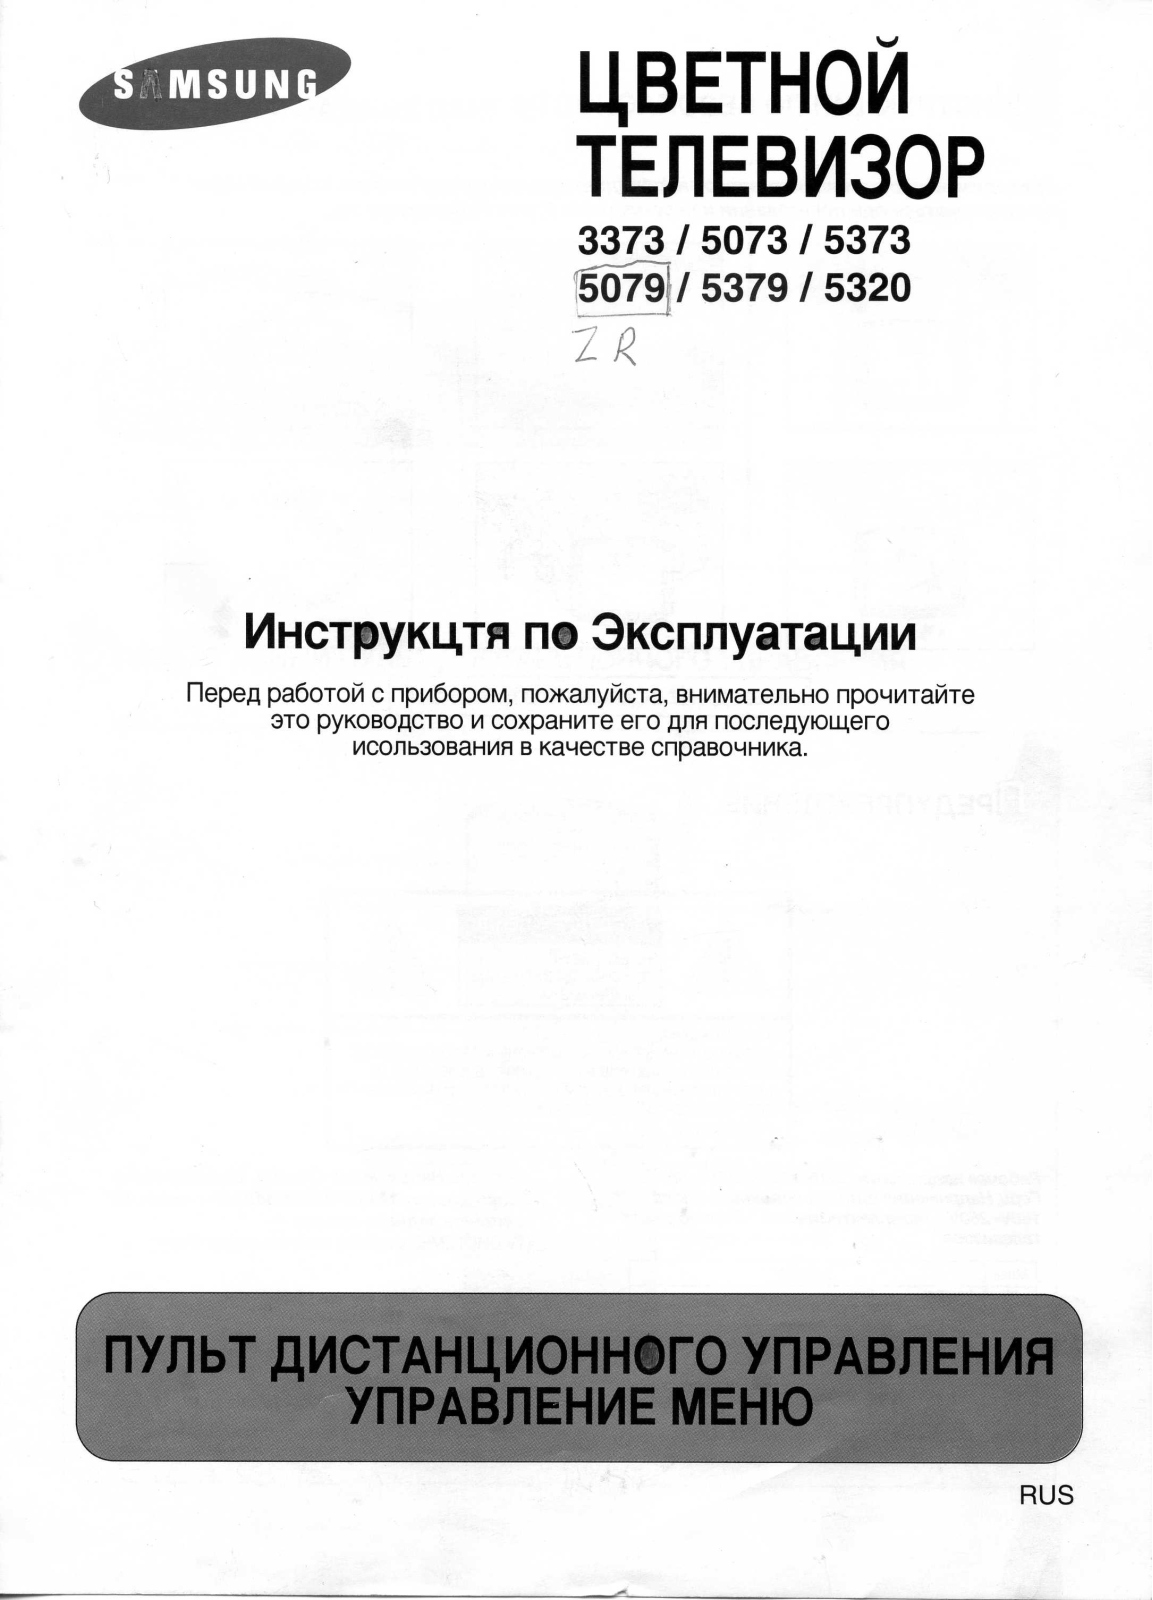 Samsung 3379, 5073, 5373, 5079, 5379 Manual